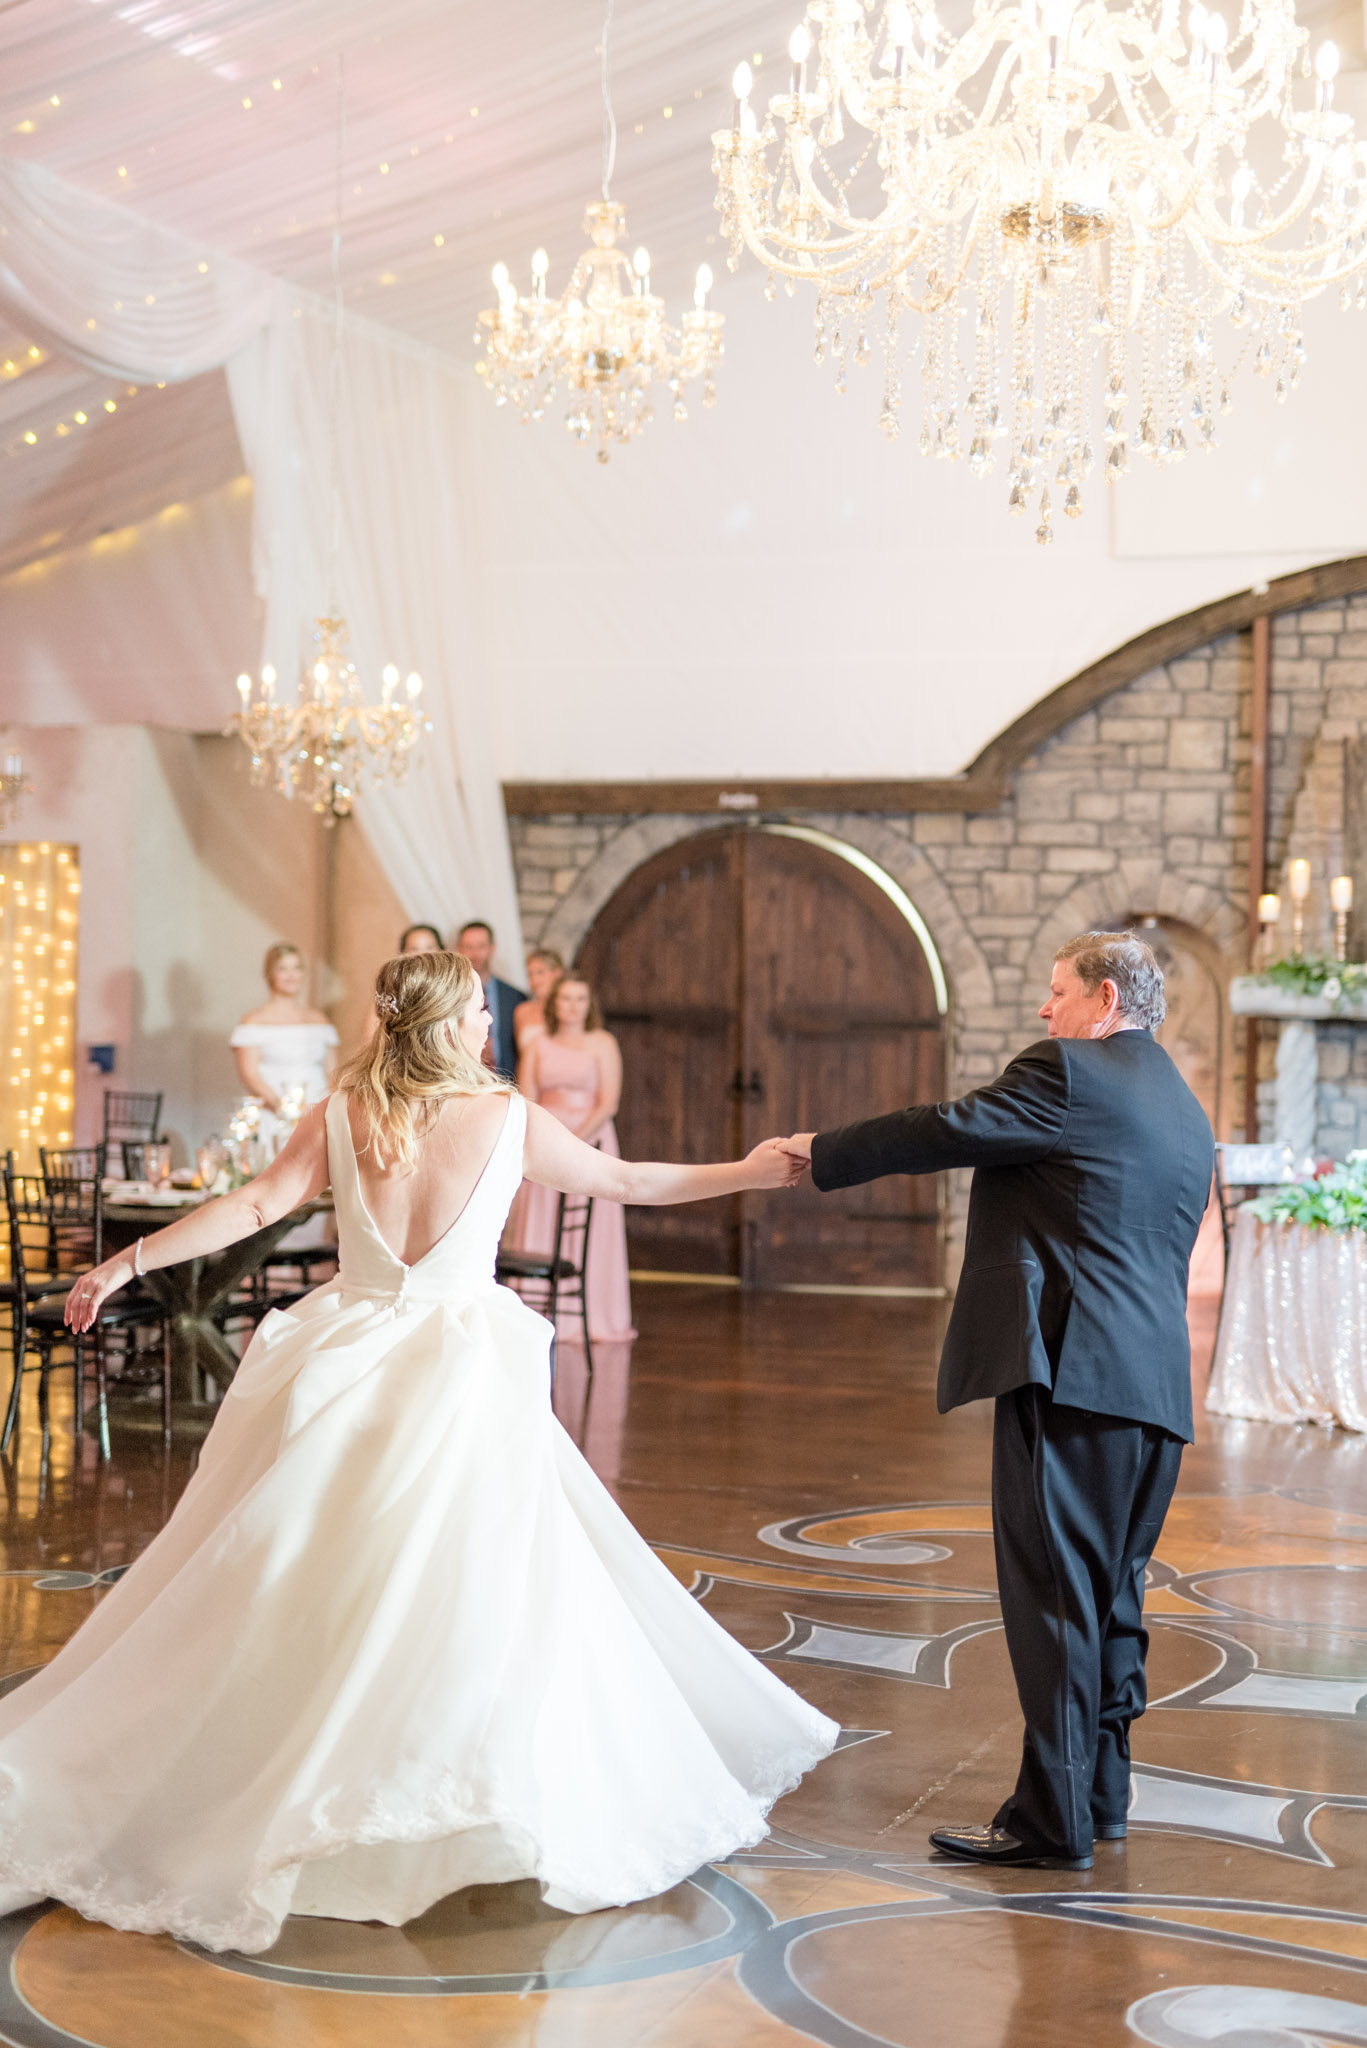 Father twirls bride during dance.